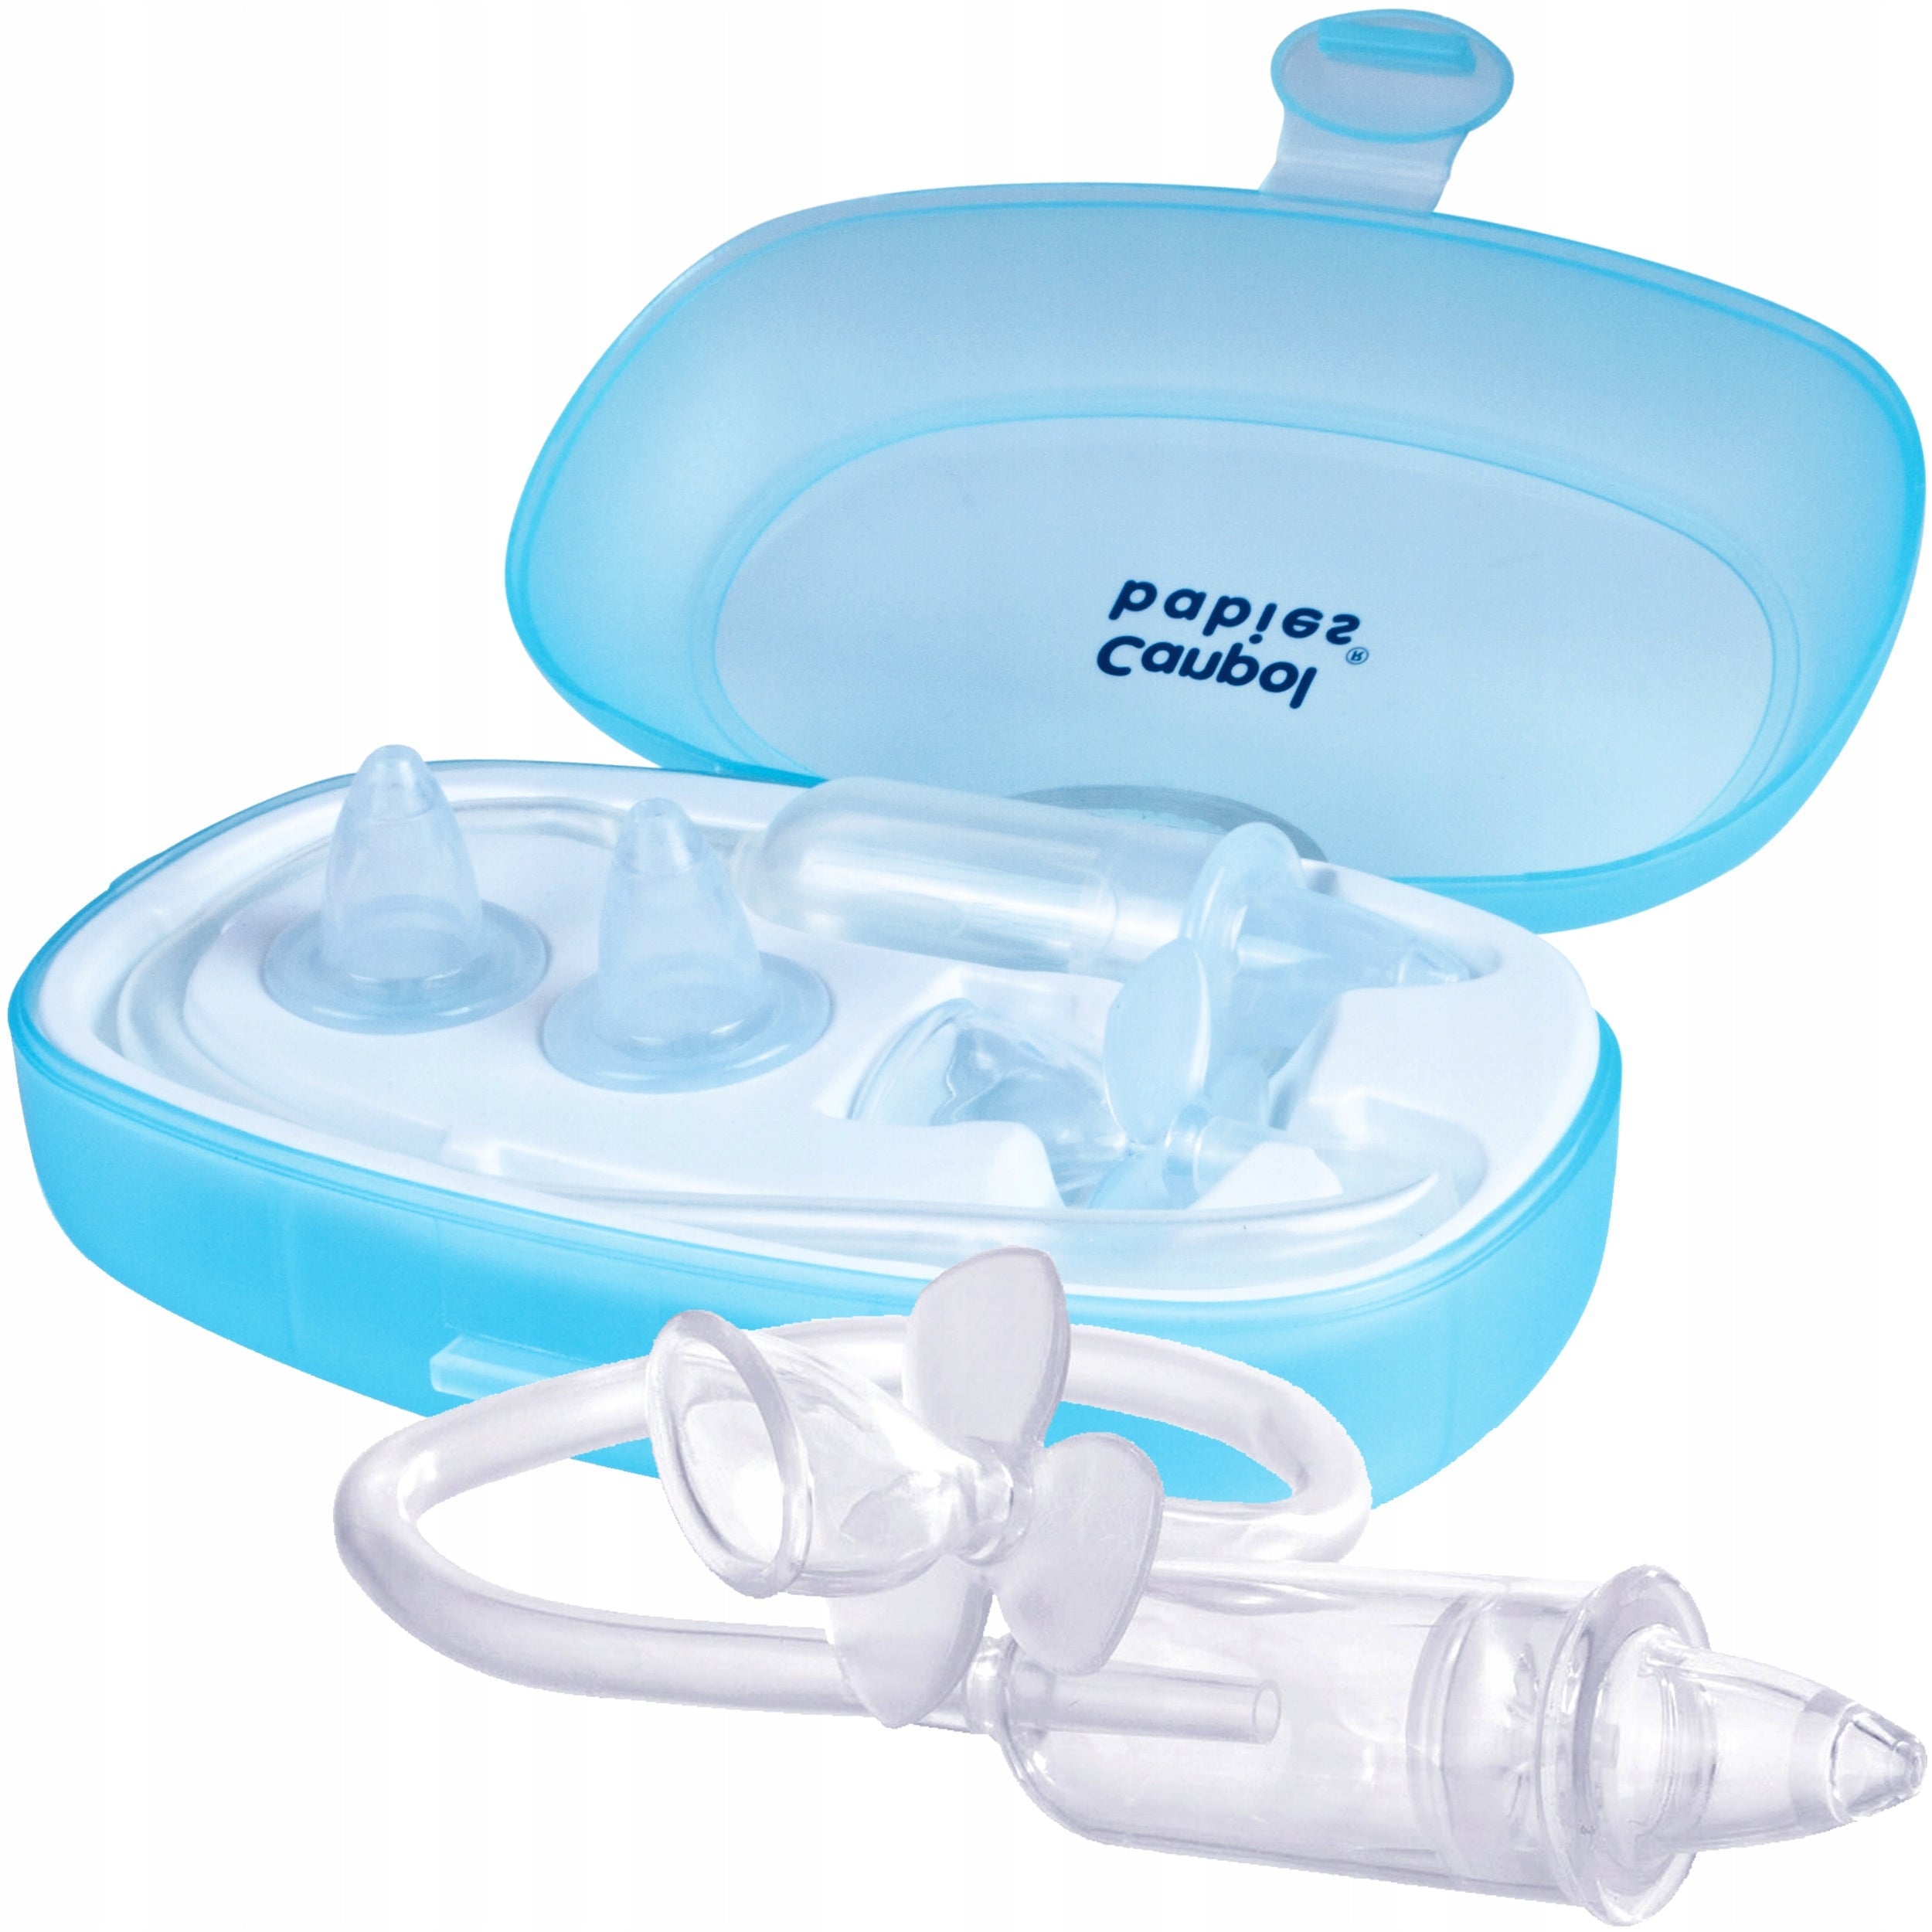 Canpol Babies: nose aspirator with a soft tip